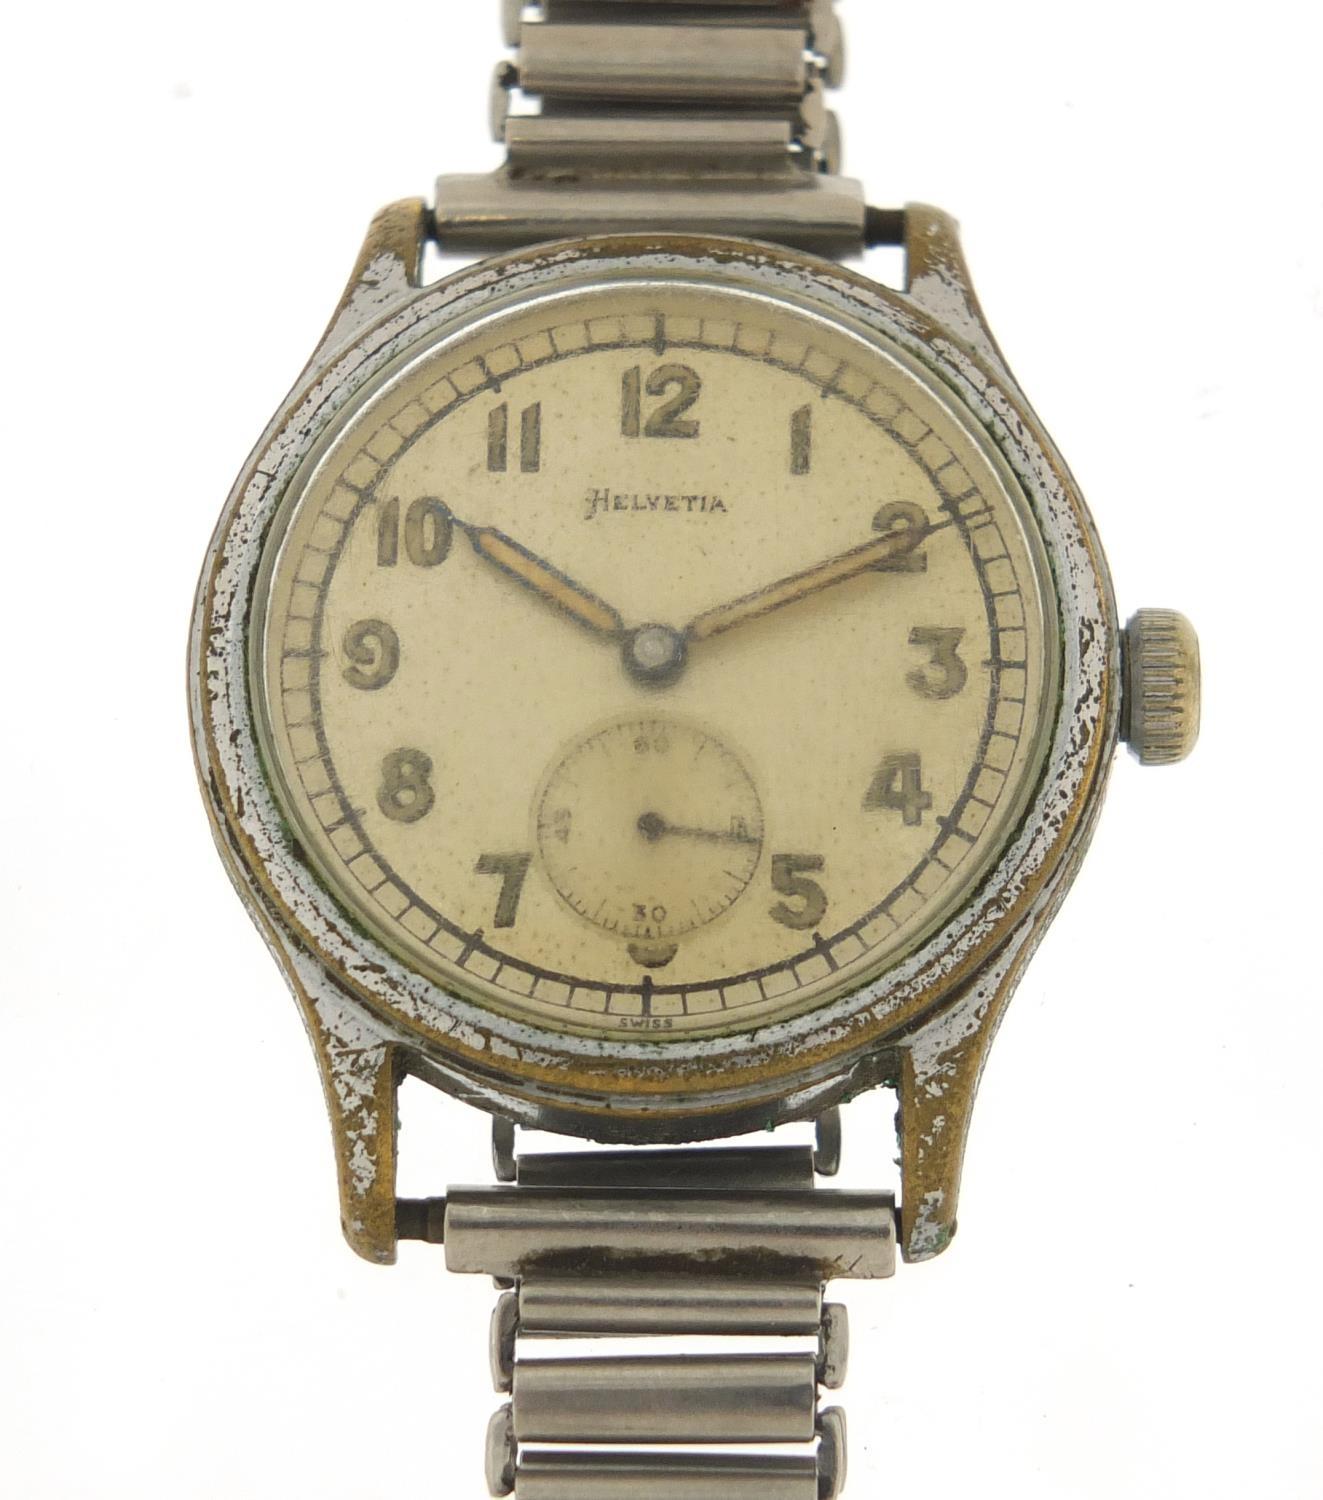 Helvetia, vintage gentlemen's manual wristwatch with military dial, 33.5mm in diameter